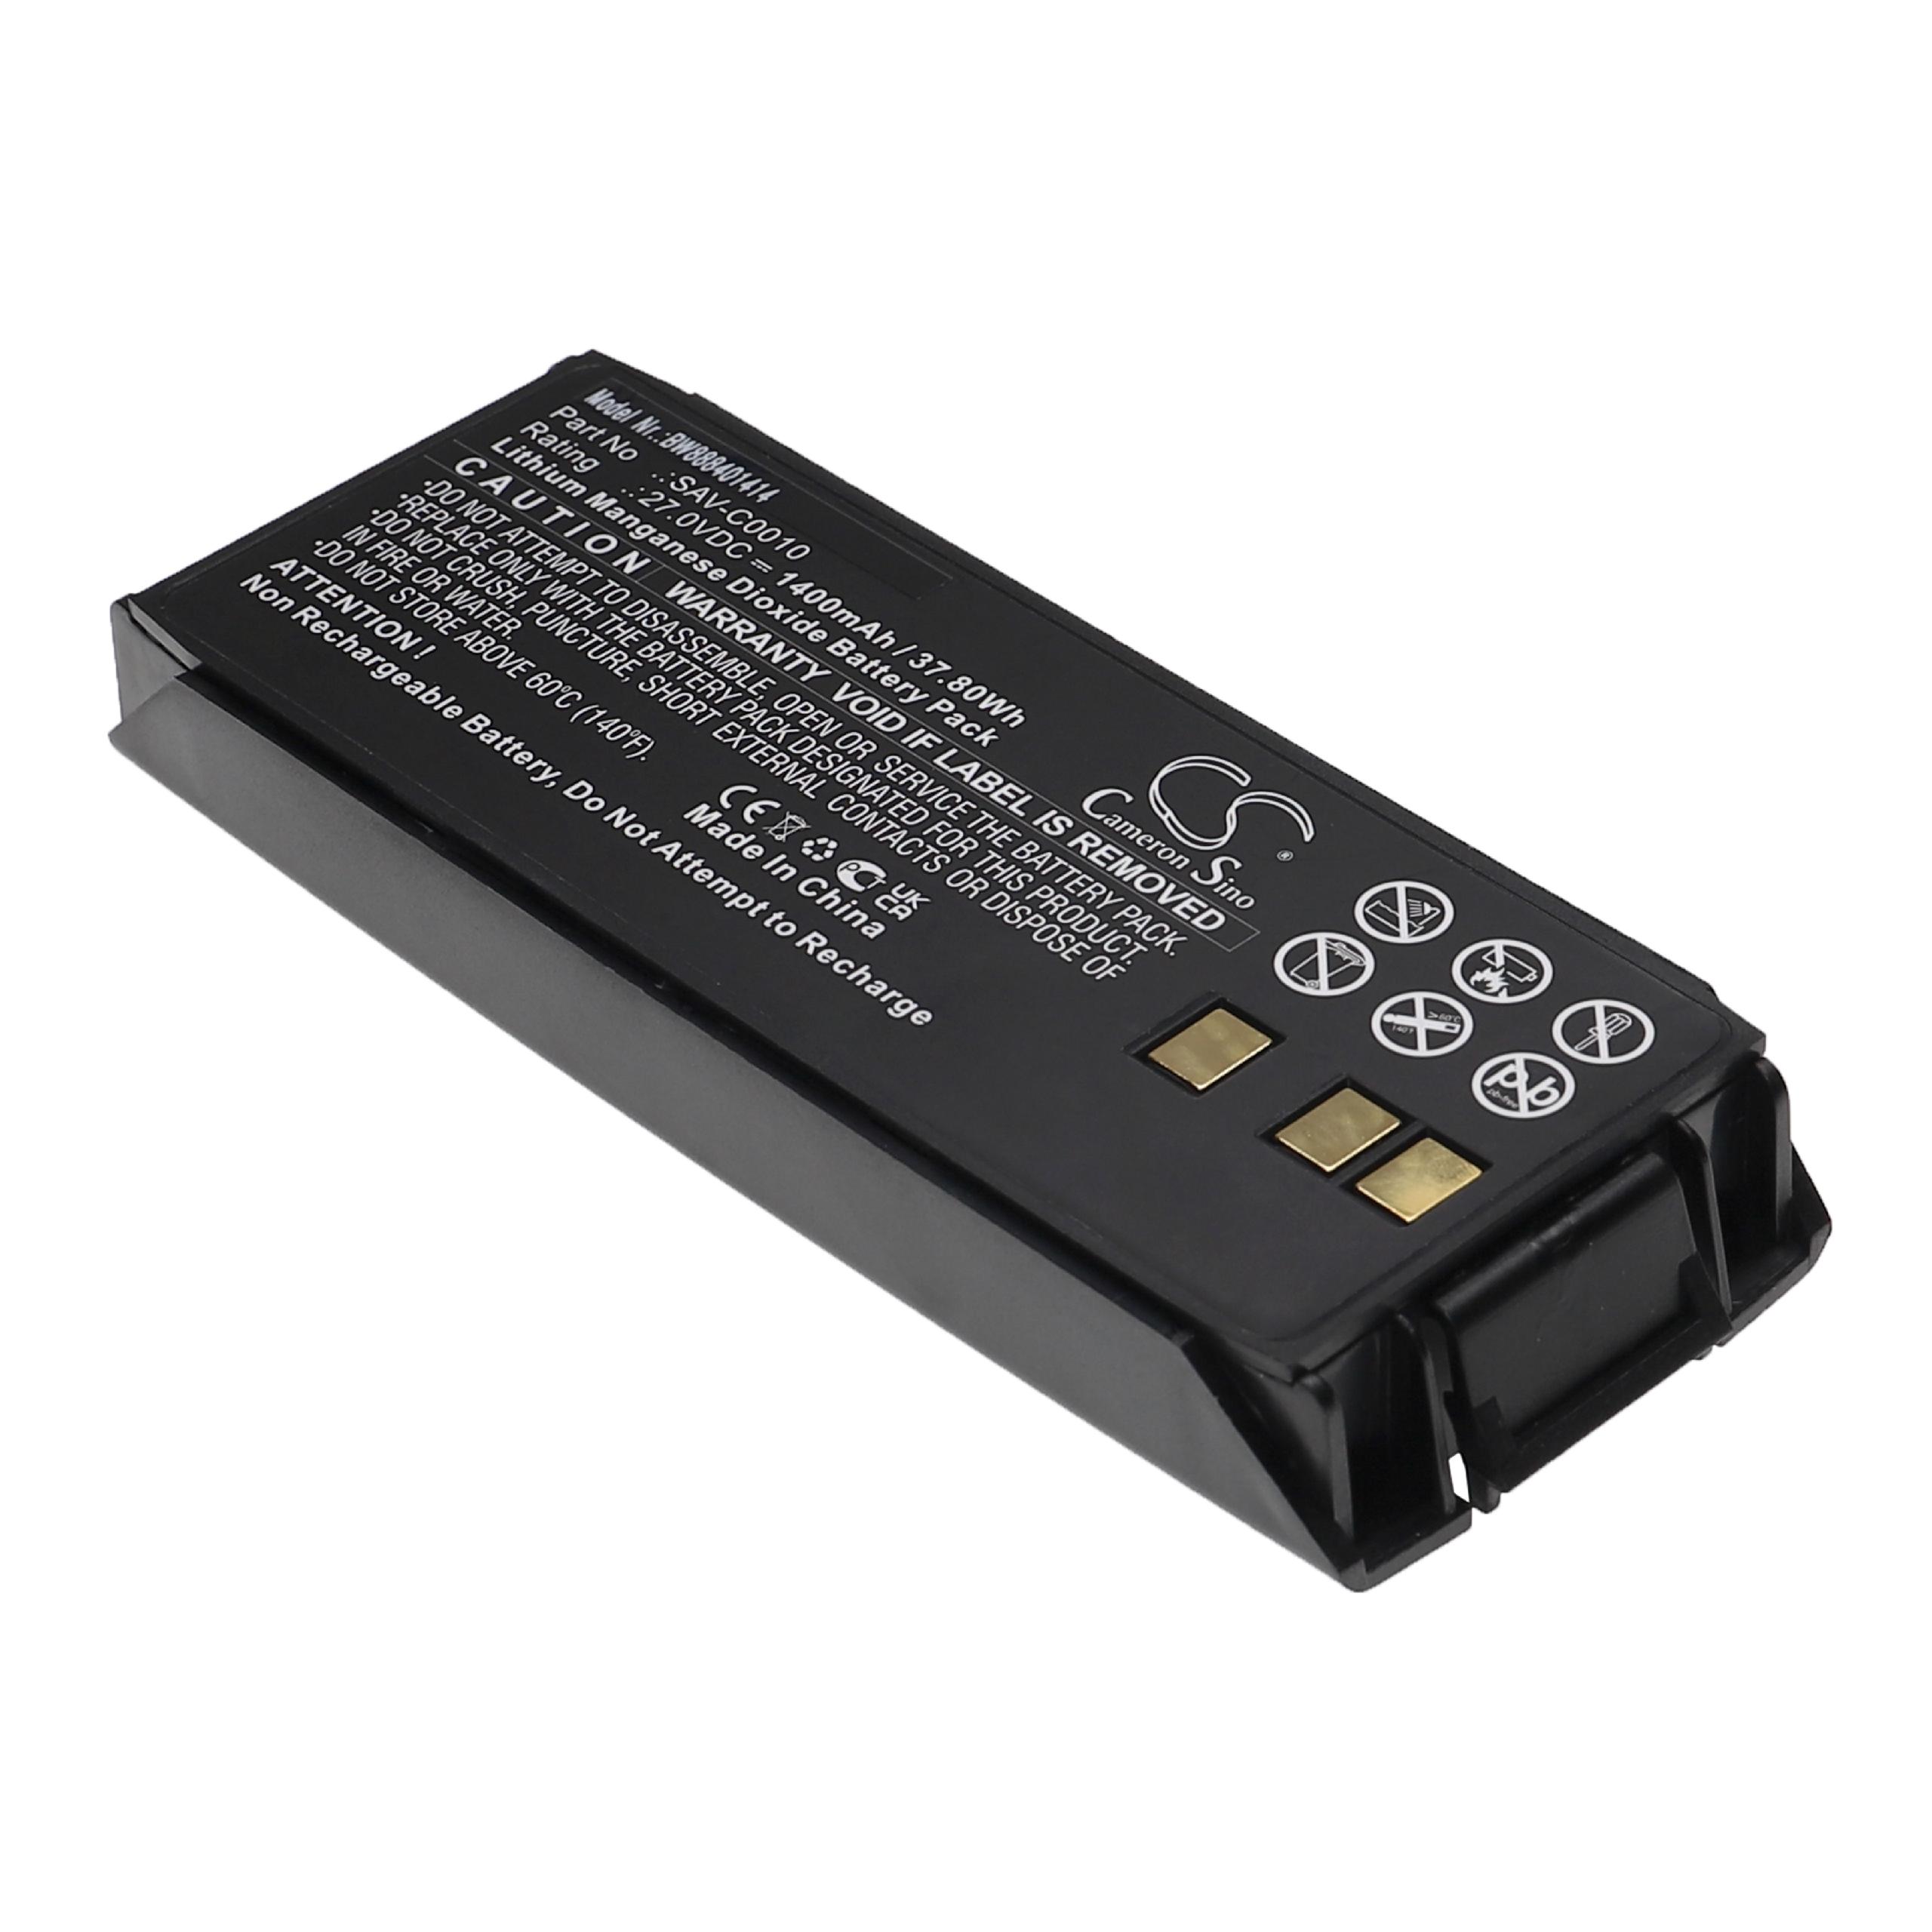 Batterie als Ersatz für Saver One SAV-C0010 - 1400mAh 27V Li-MnO2